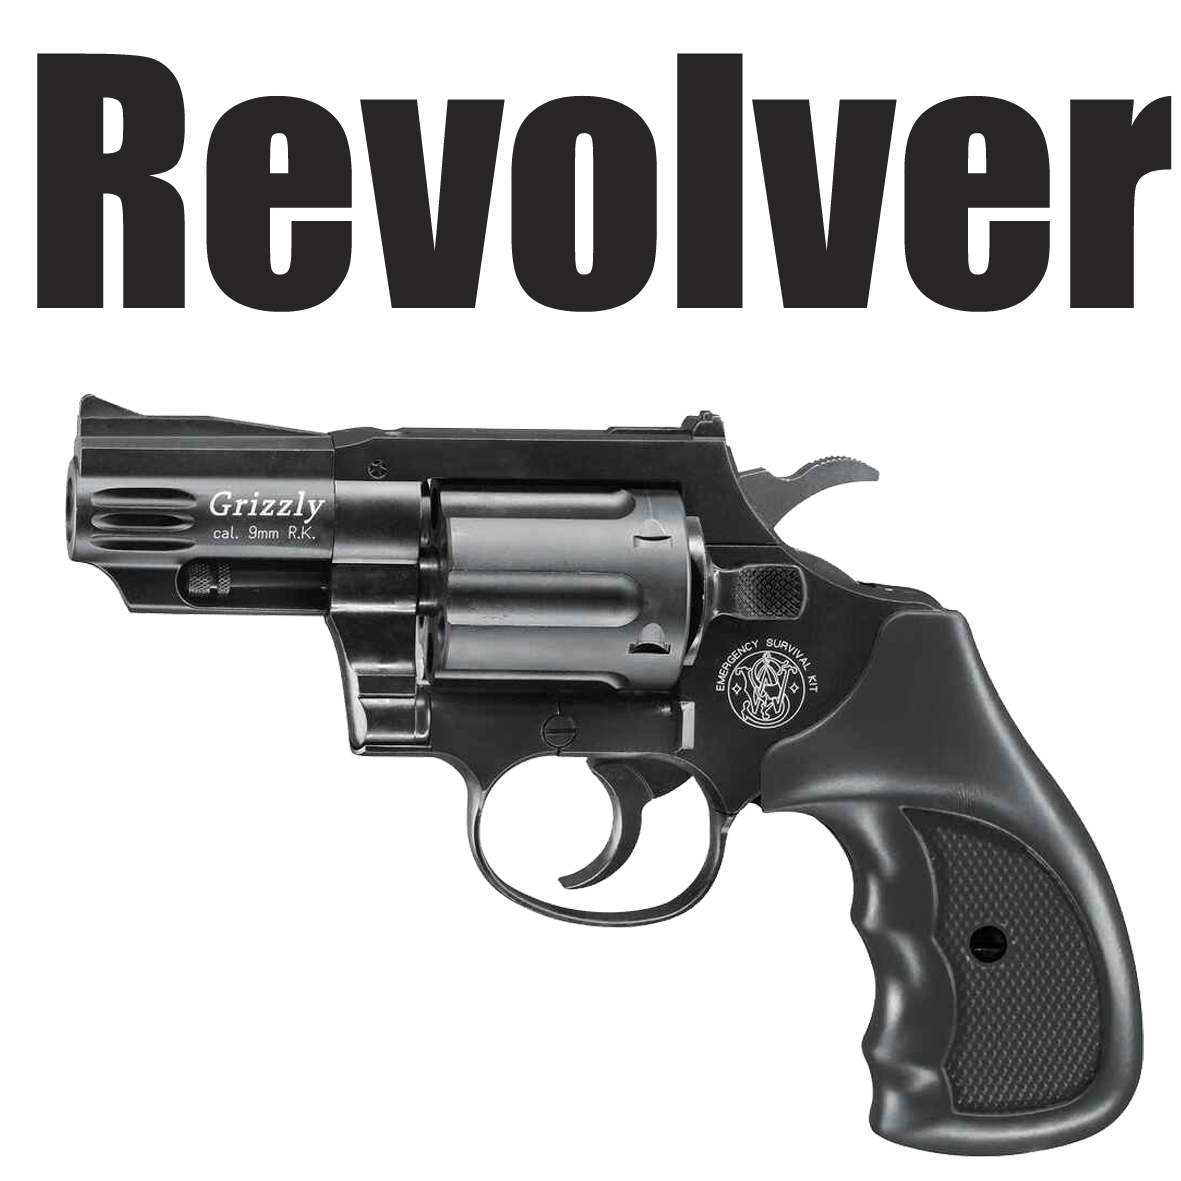 Revolver_Kopie